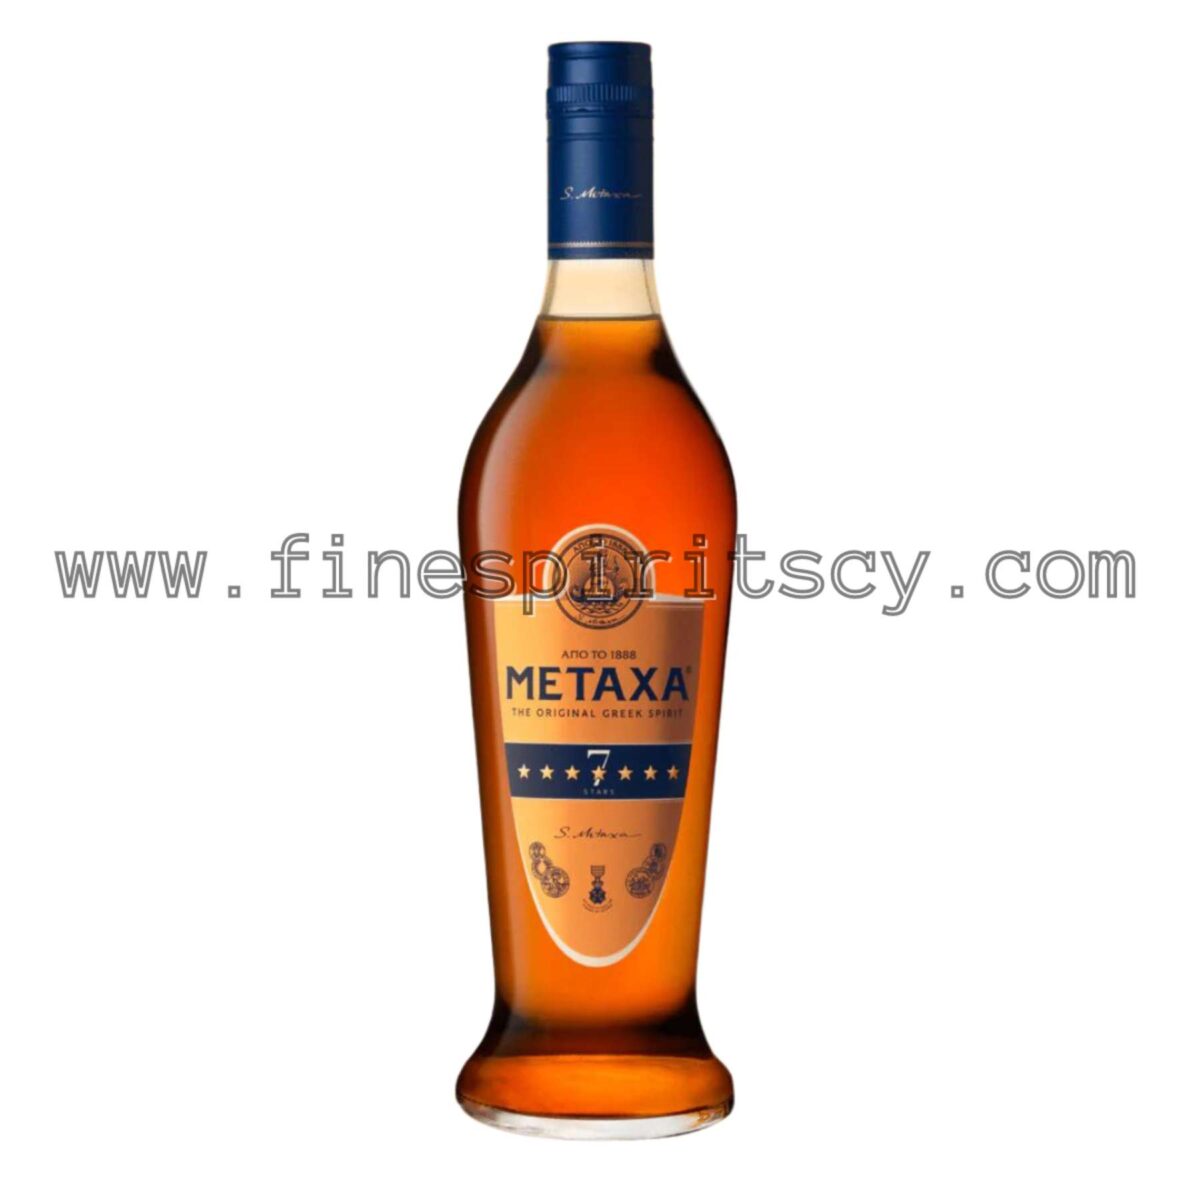 Metaxa 7 Star FSCY Cyprus Price 1000ml 100cl 1L Liter Litre brandy cognac order online